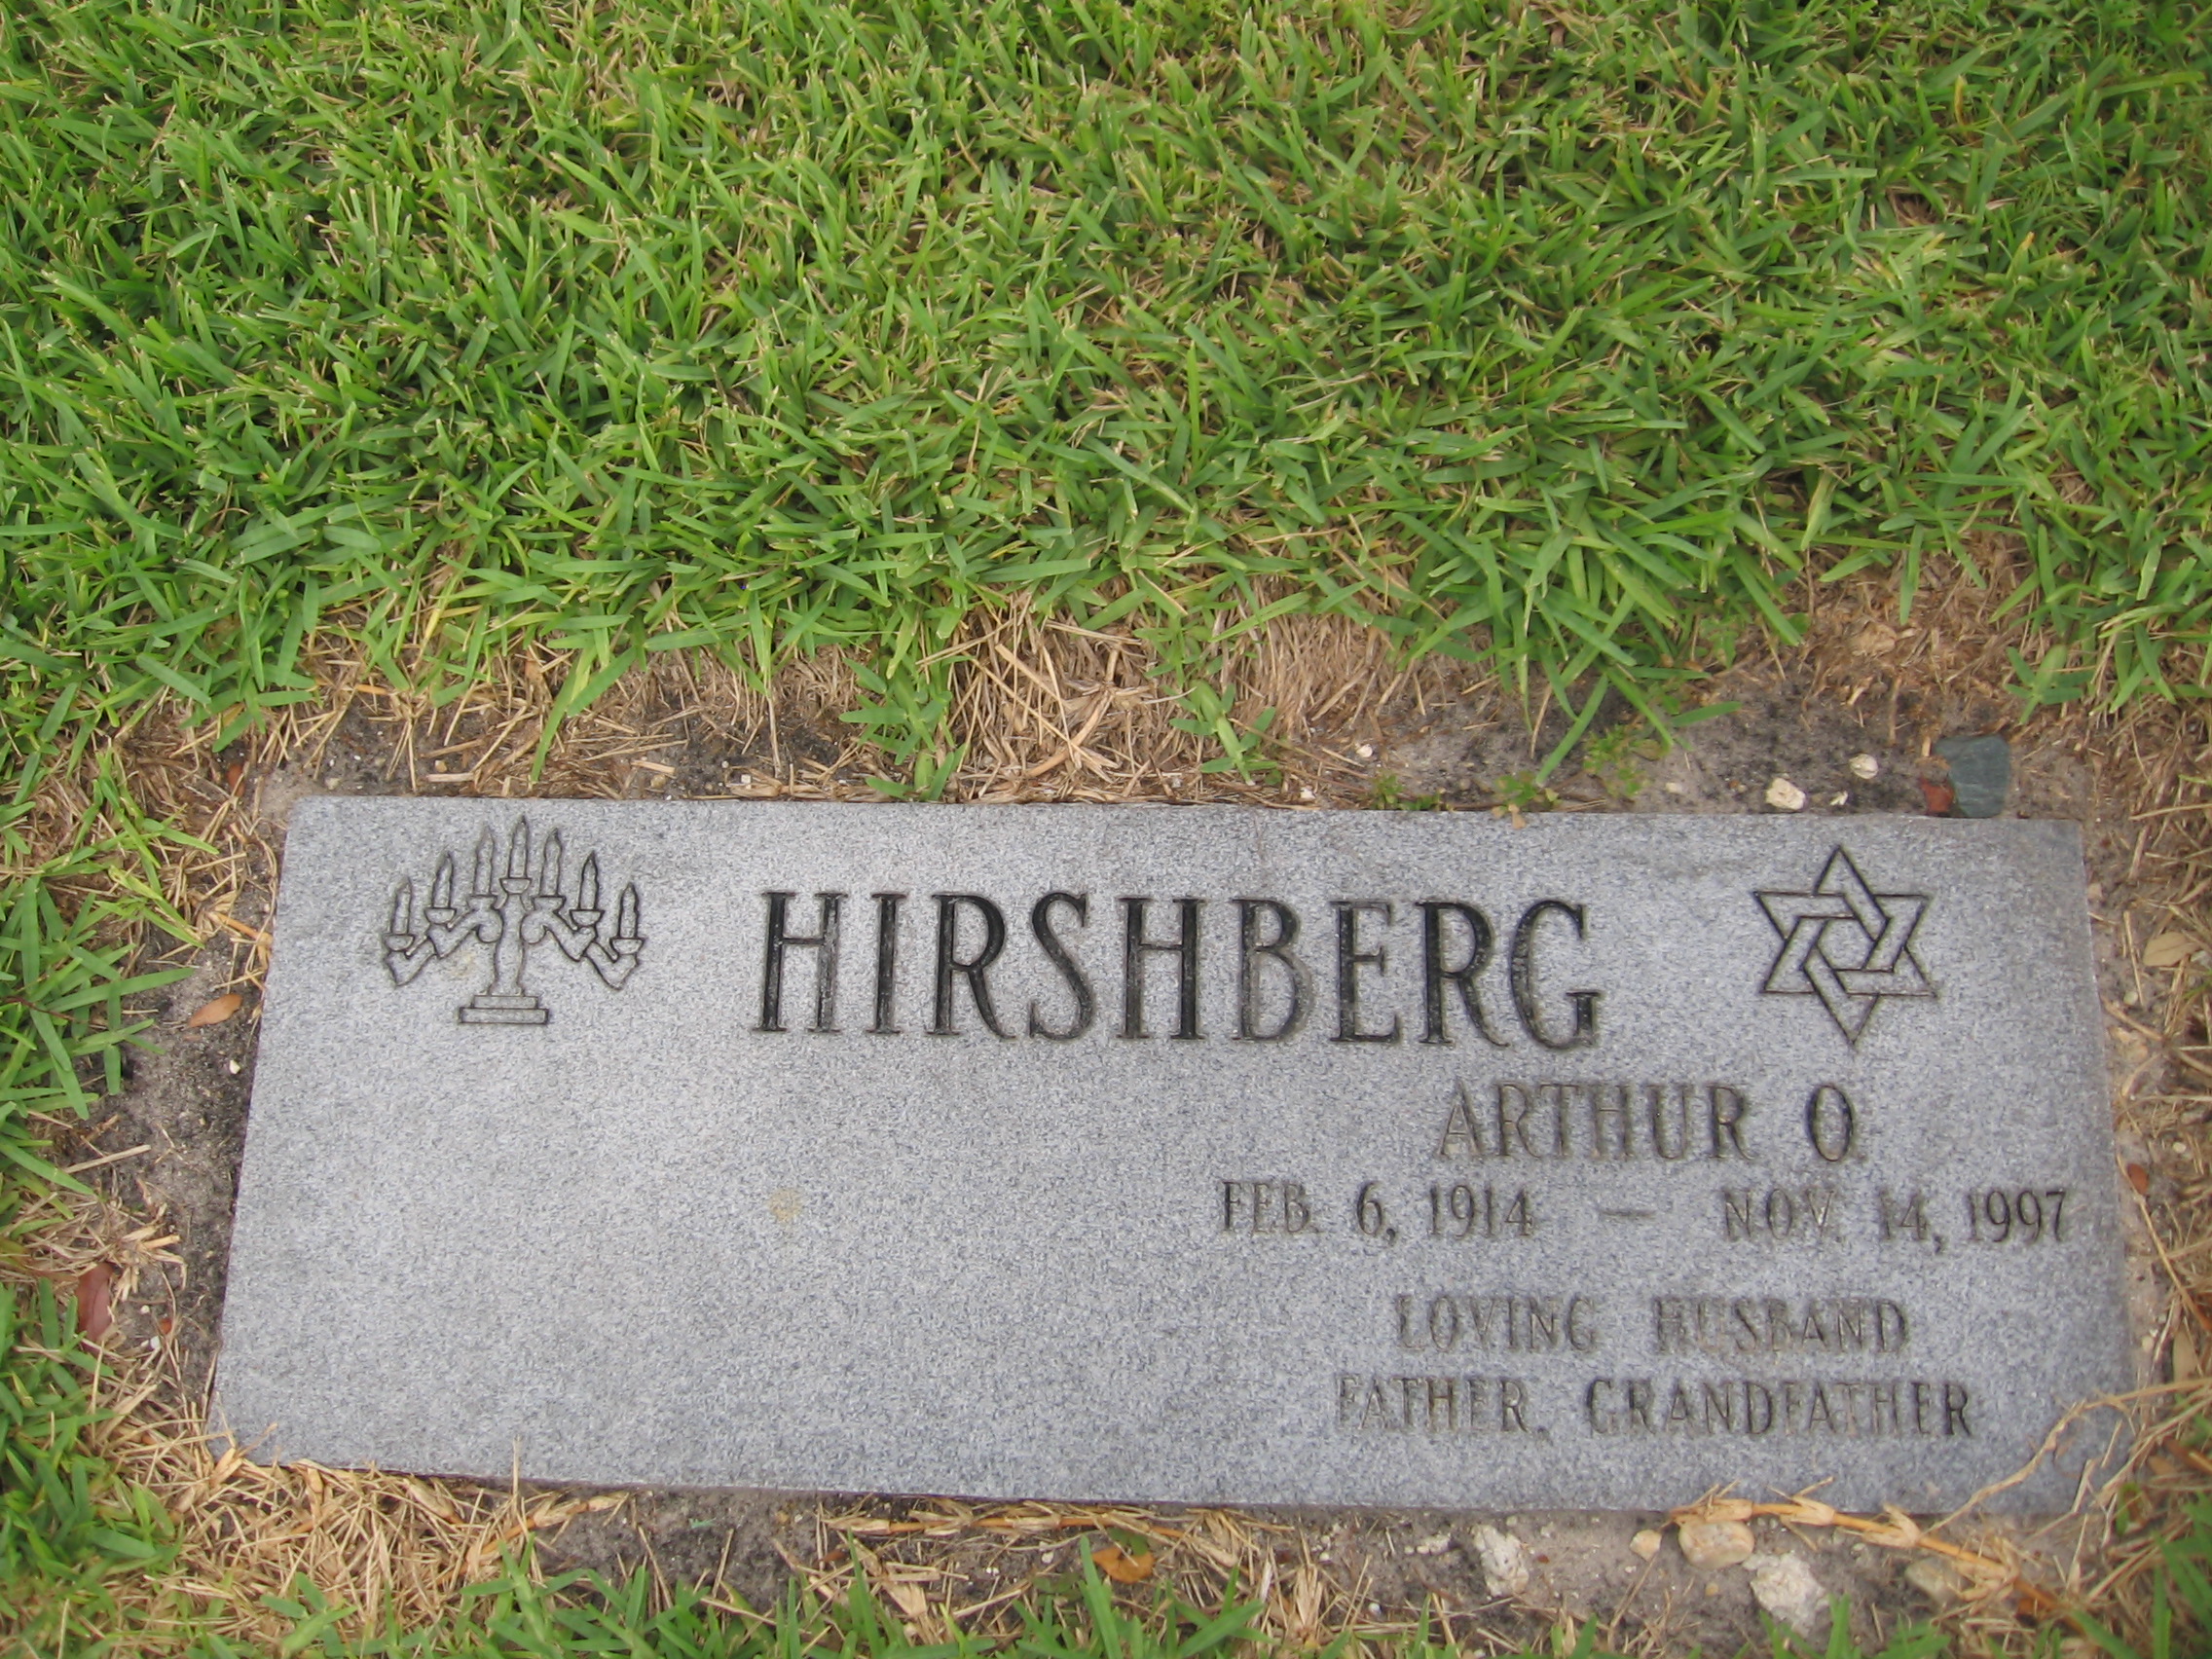 Arthur O Hirshberg